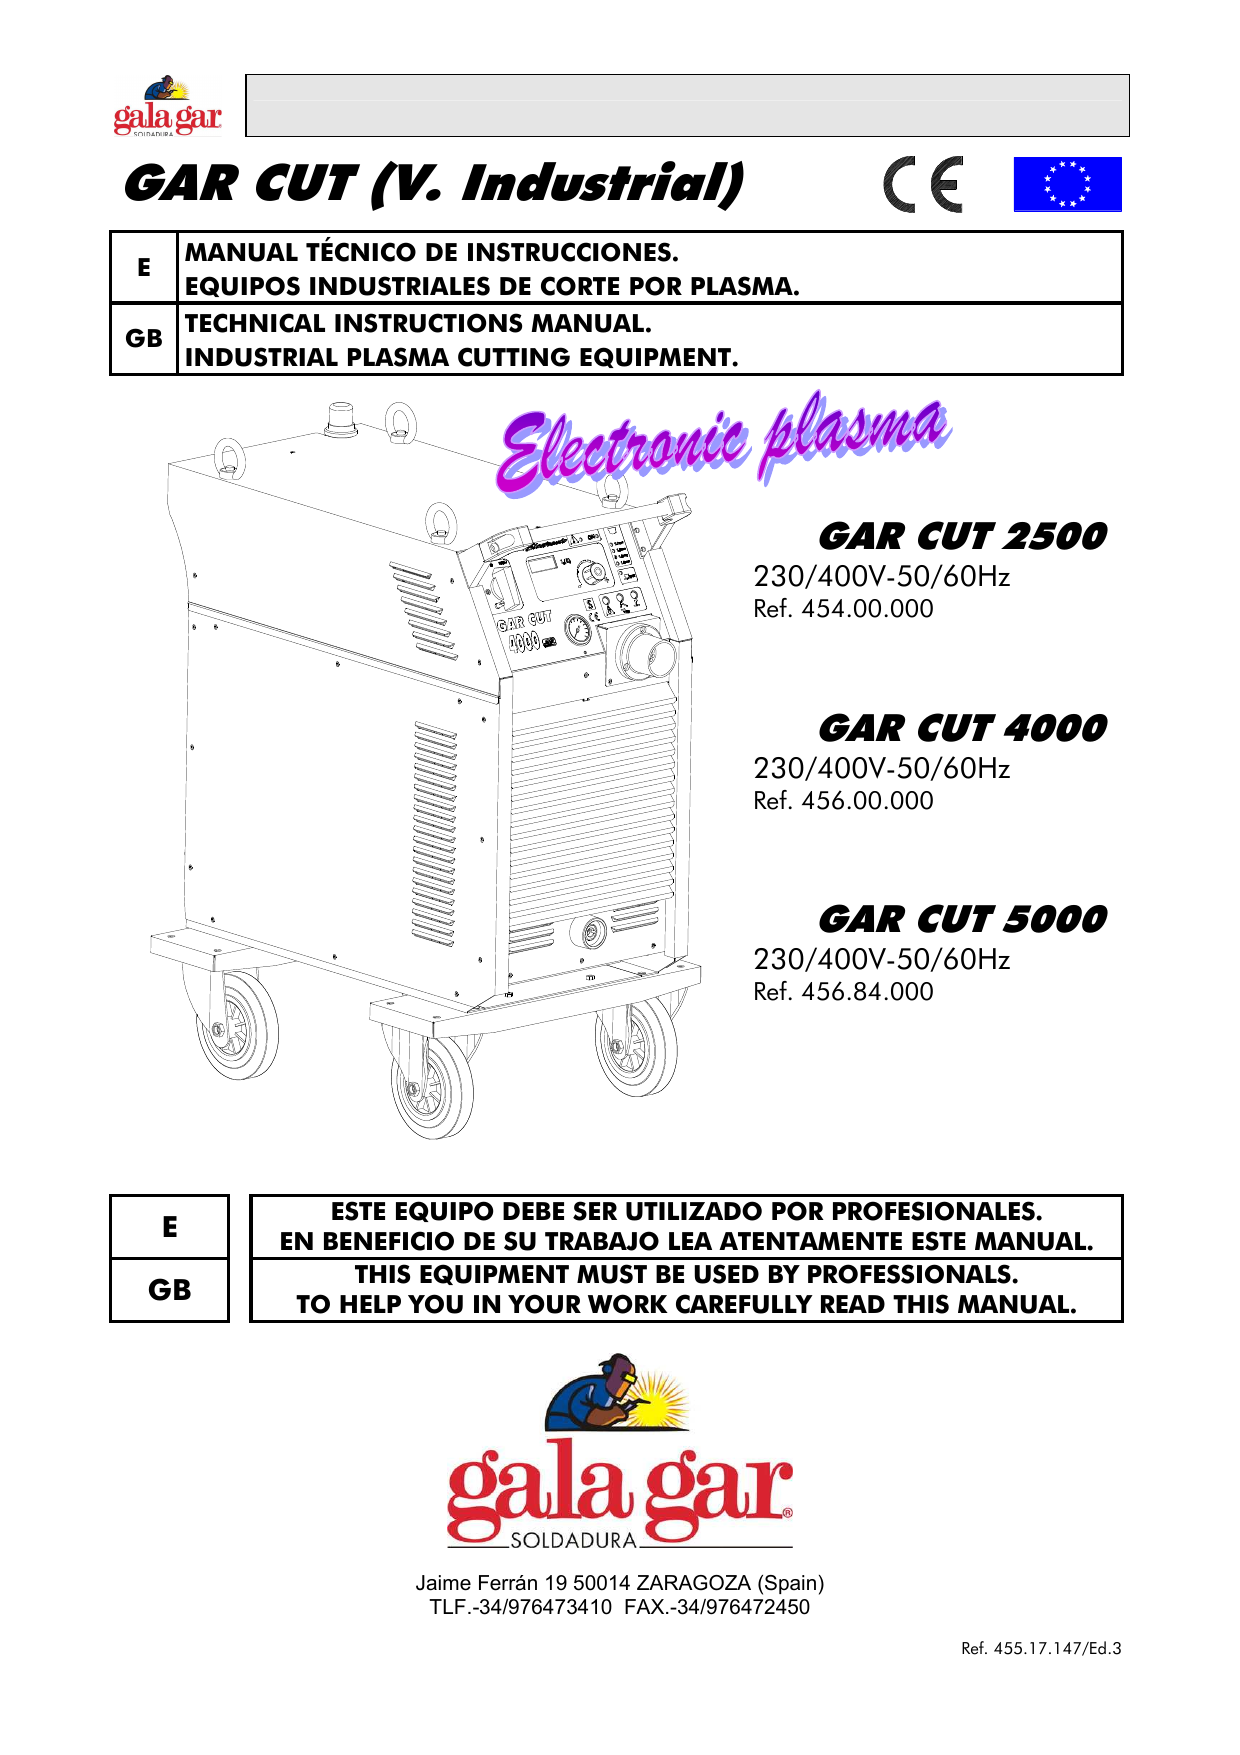 gala gar GAR CUT 2500 Technical Instruction Manual